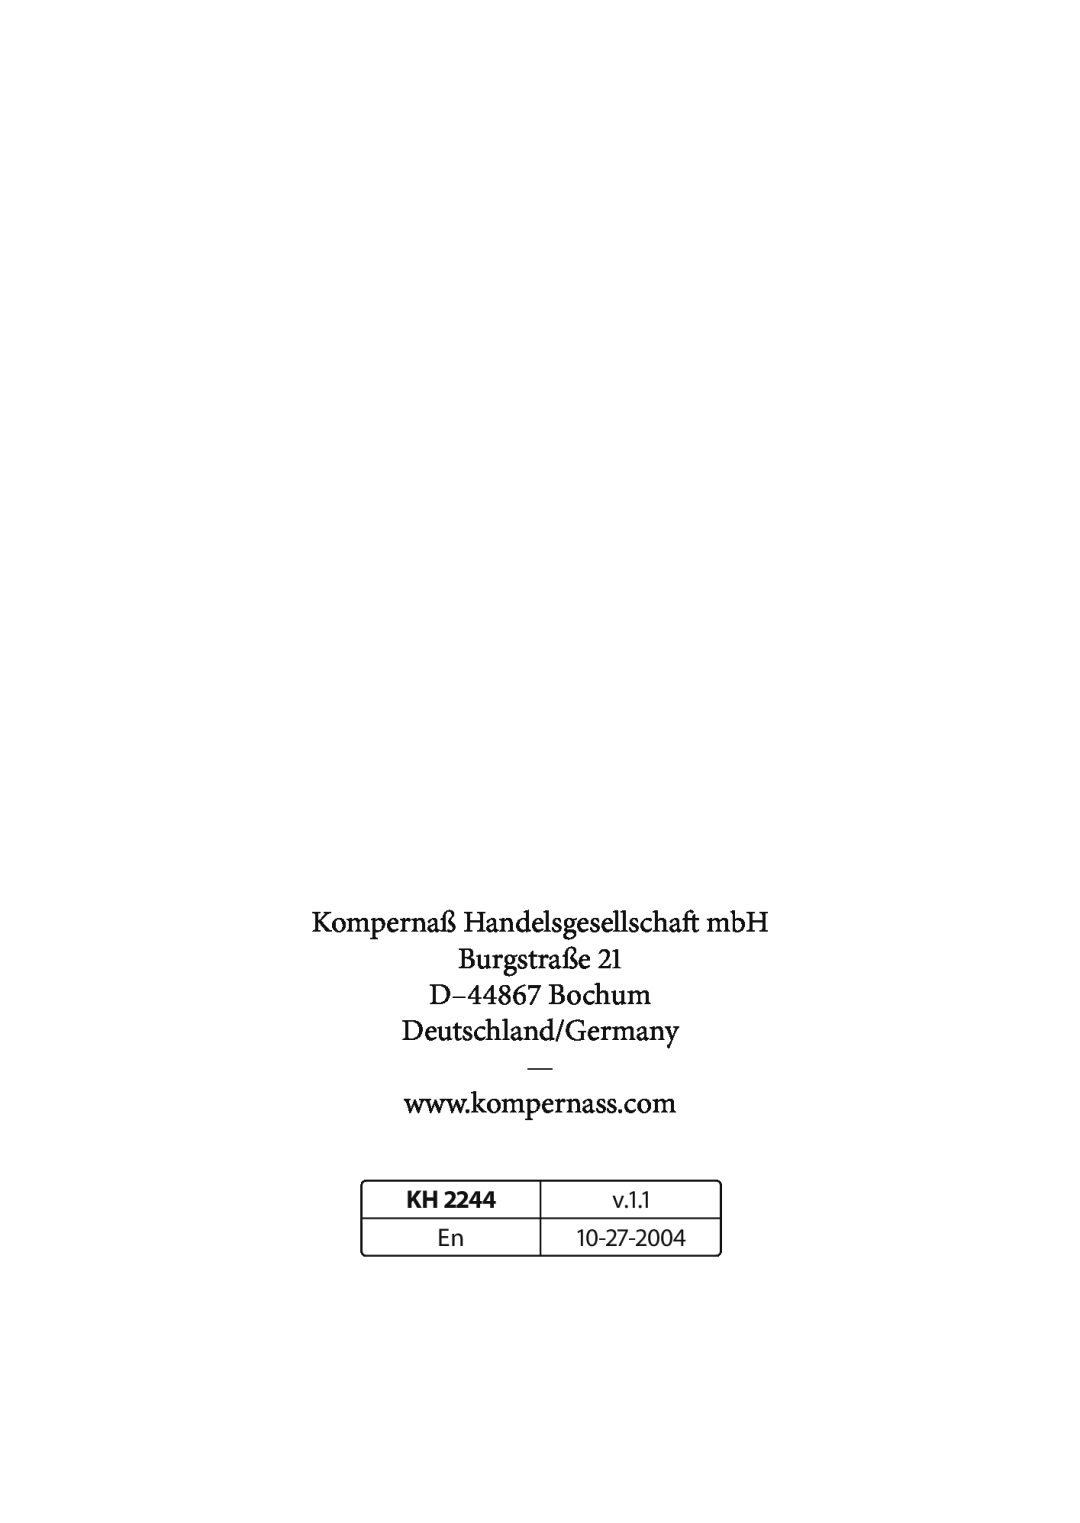 Kompernass KH 2244 manual Kompernaß Handelsgesellschaft mbH Burgstraße, D-44867Bochum Deutschland/Germany 